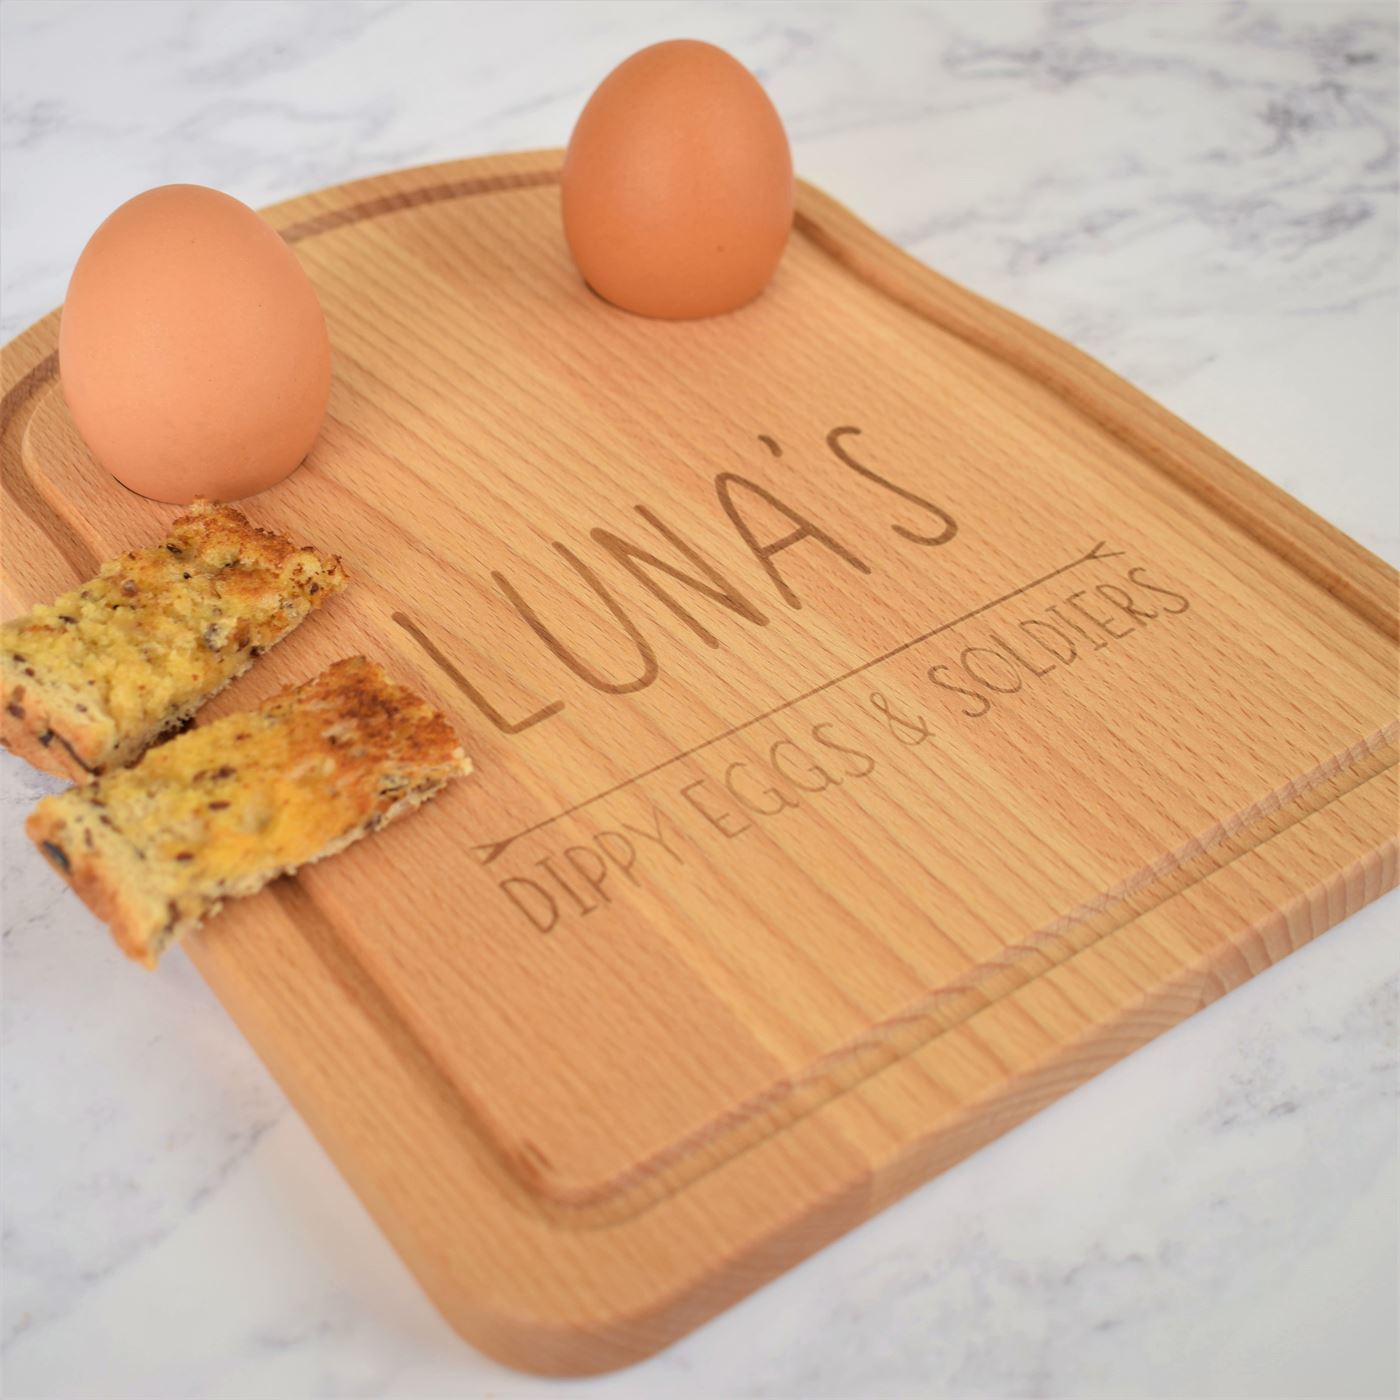 Personalised Egg & Toast Breakfast Board - Name